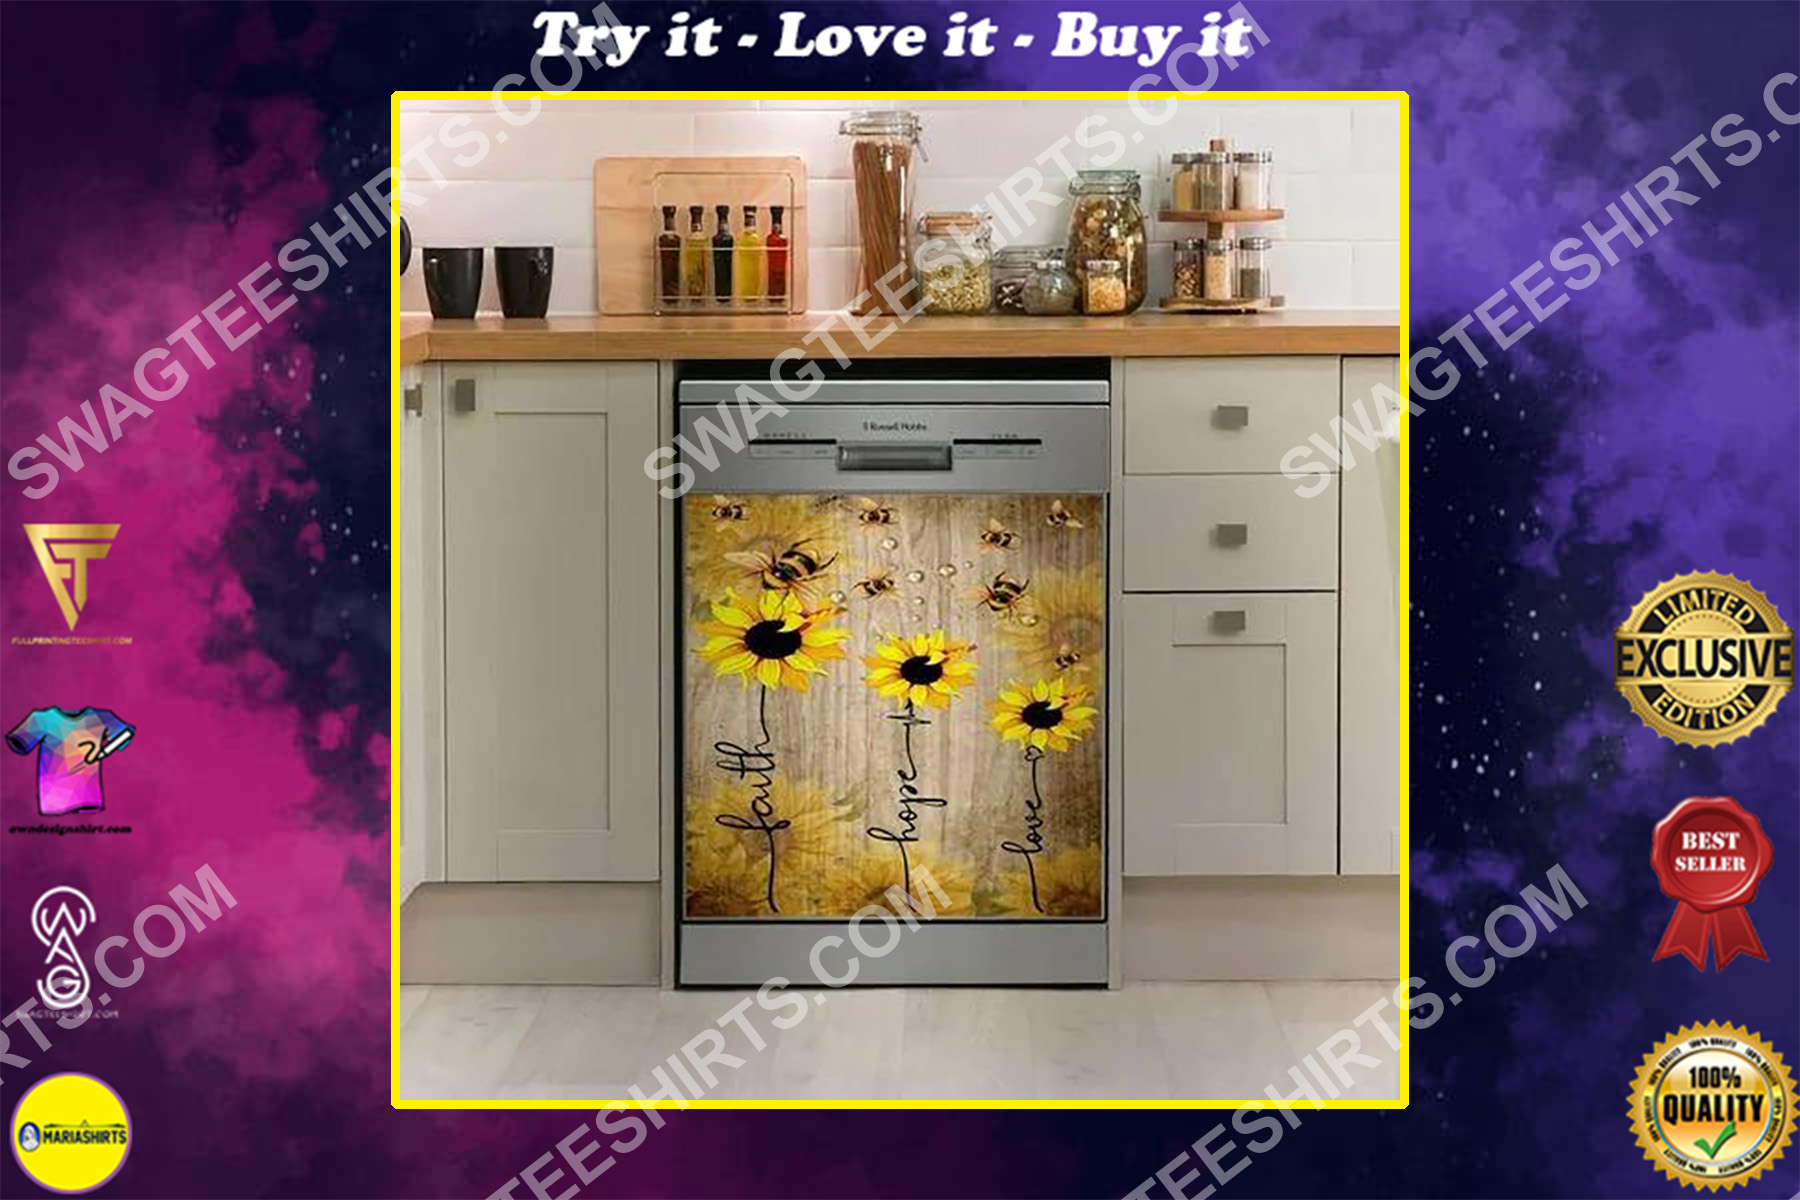 bee faith hope love vintage kitchen decorative dishwasher magnet cover